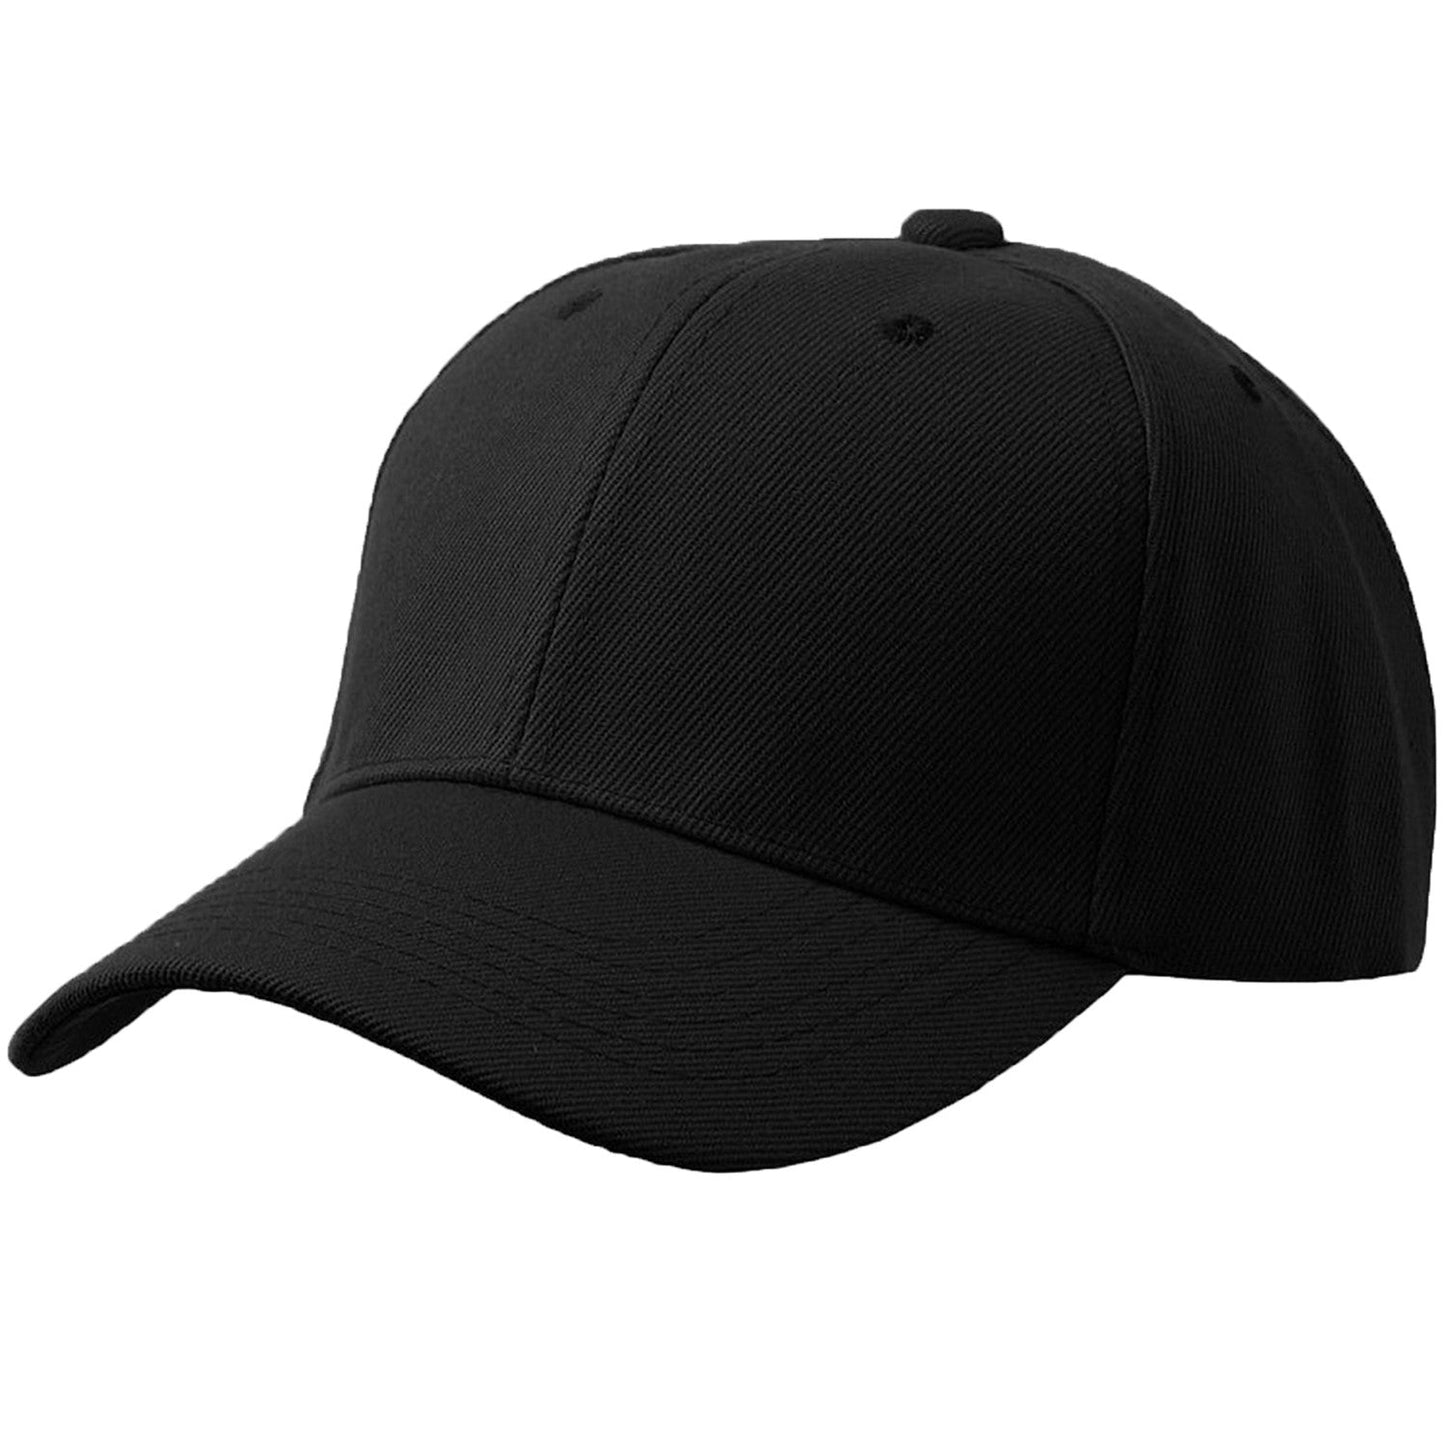 Black Plain Curved Baseball Cap - One Size